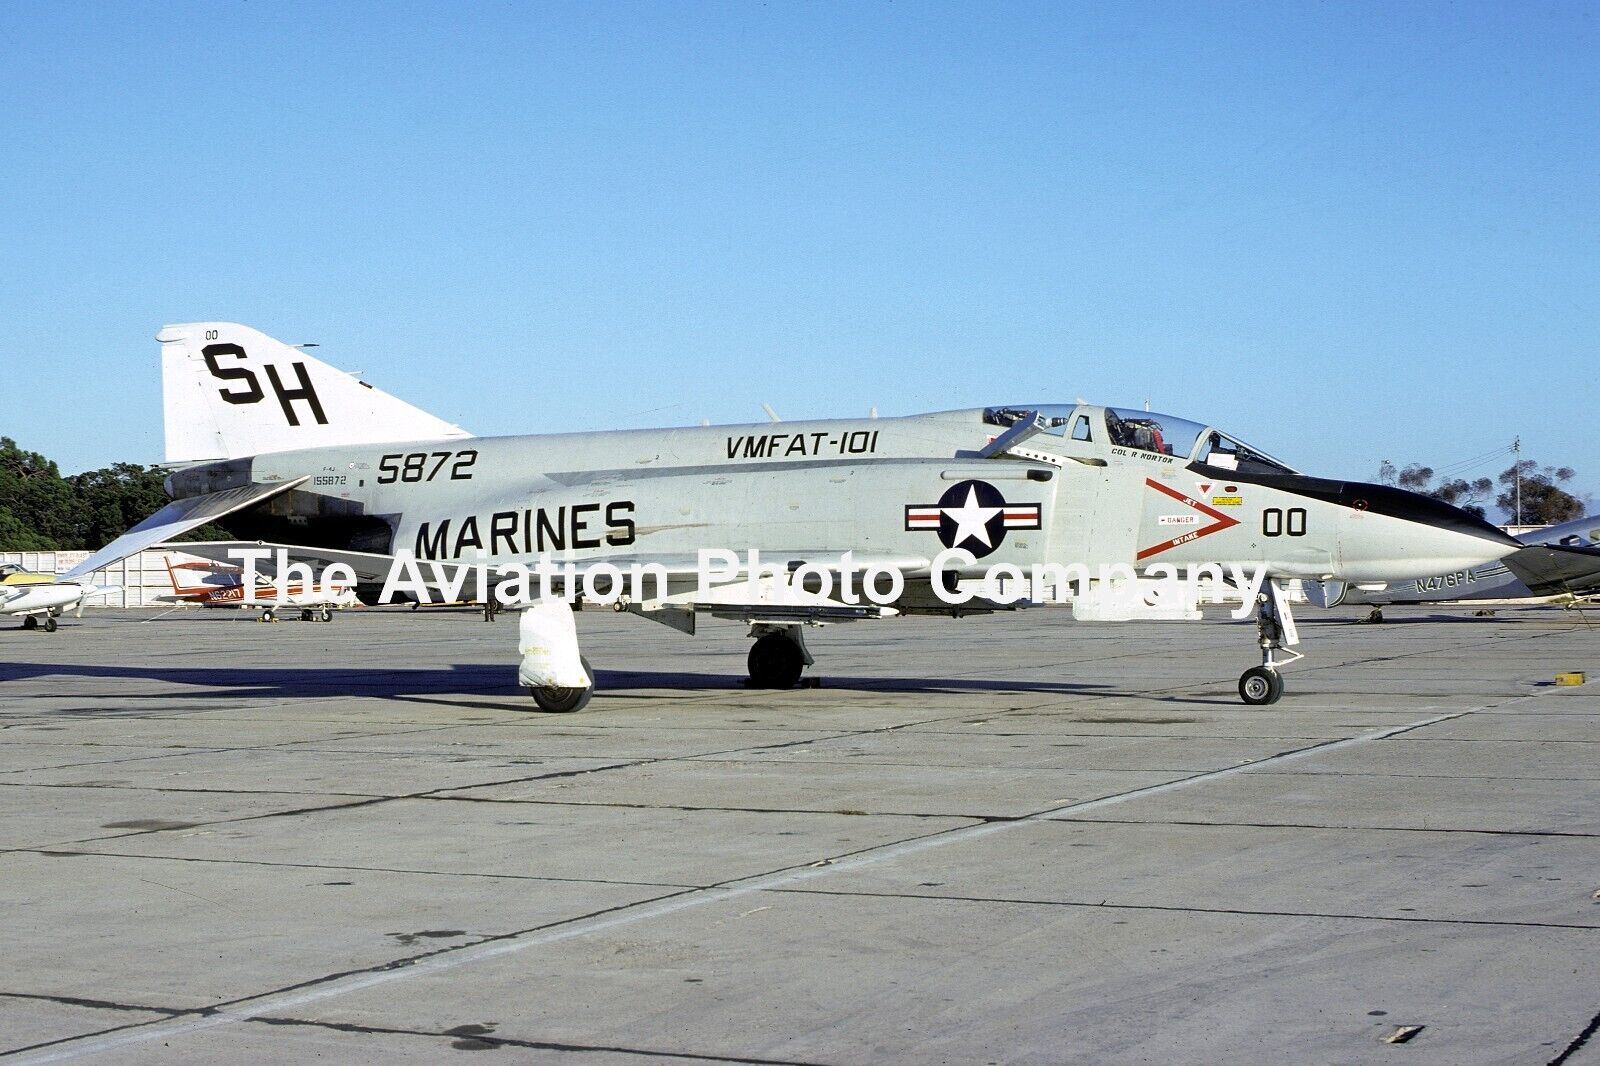 US Marines VMFAT-101 McDonnell F-4J Phantom 155872/SH-00 (1975) Photograph